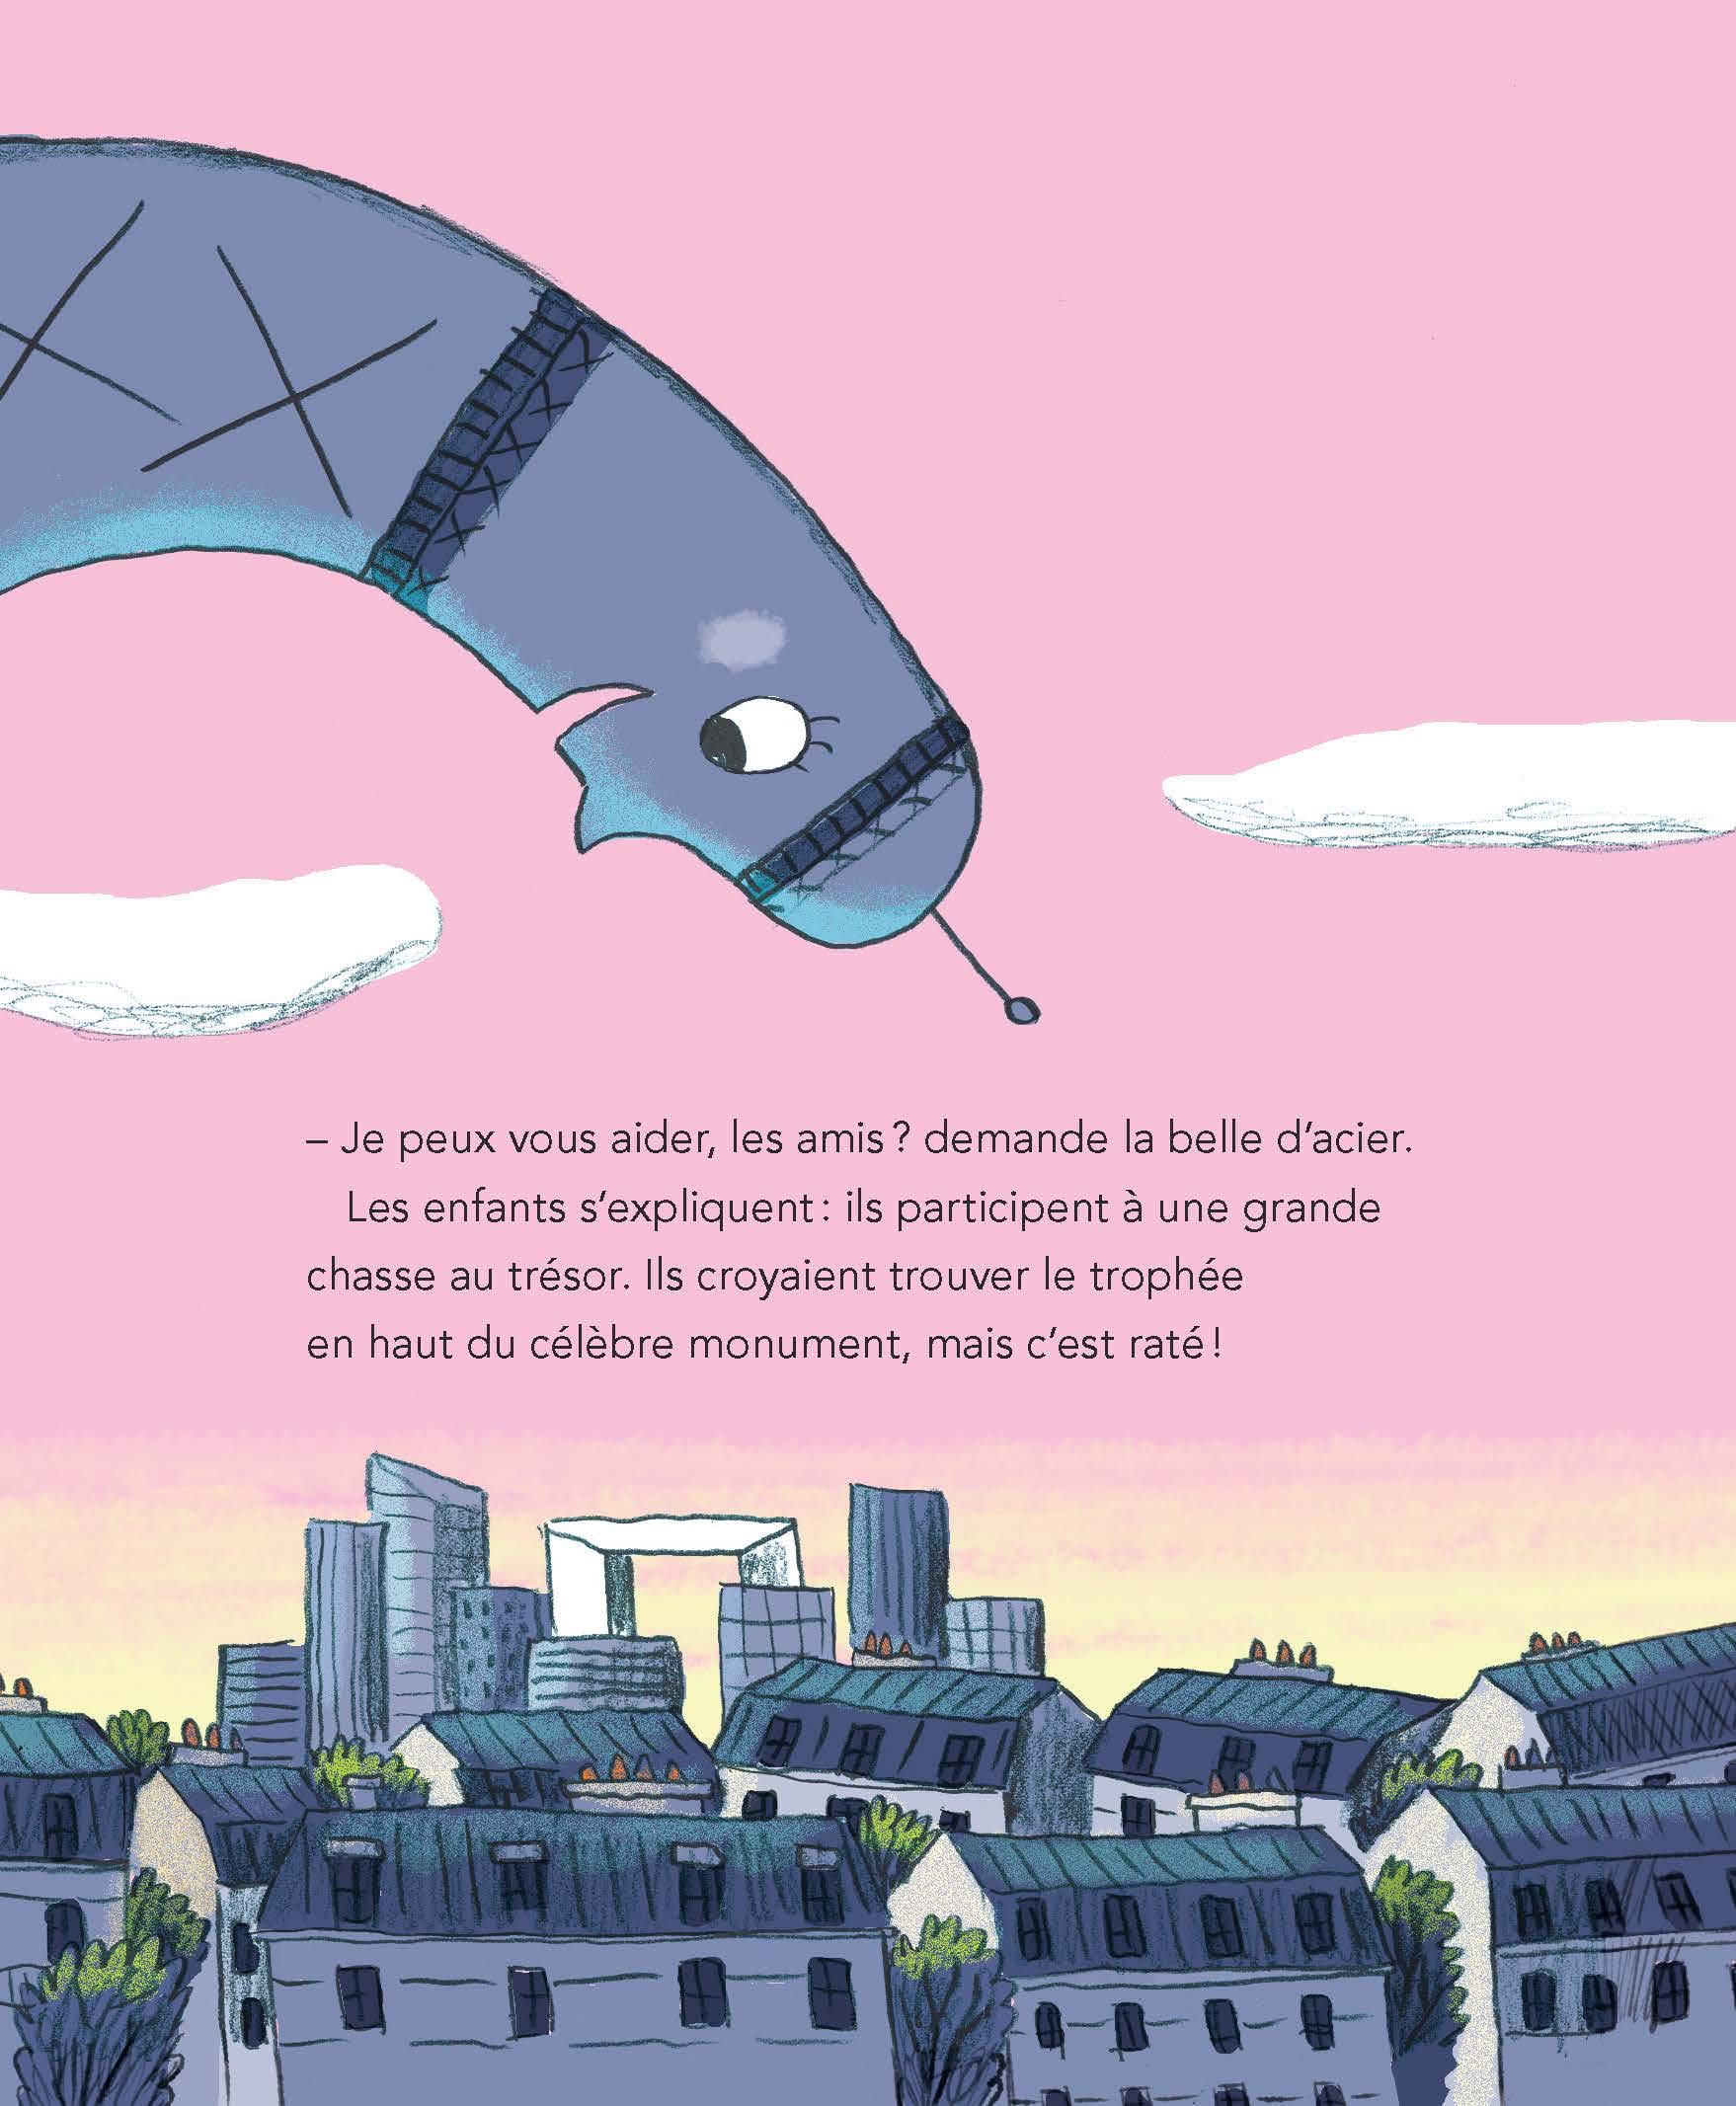 Sách luyện đọc tiếng Pháp - La tour Eiffel se balade a Paris